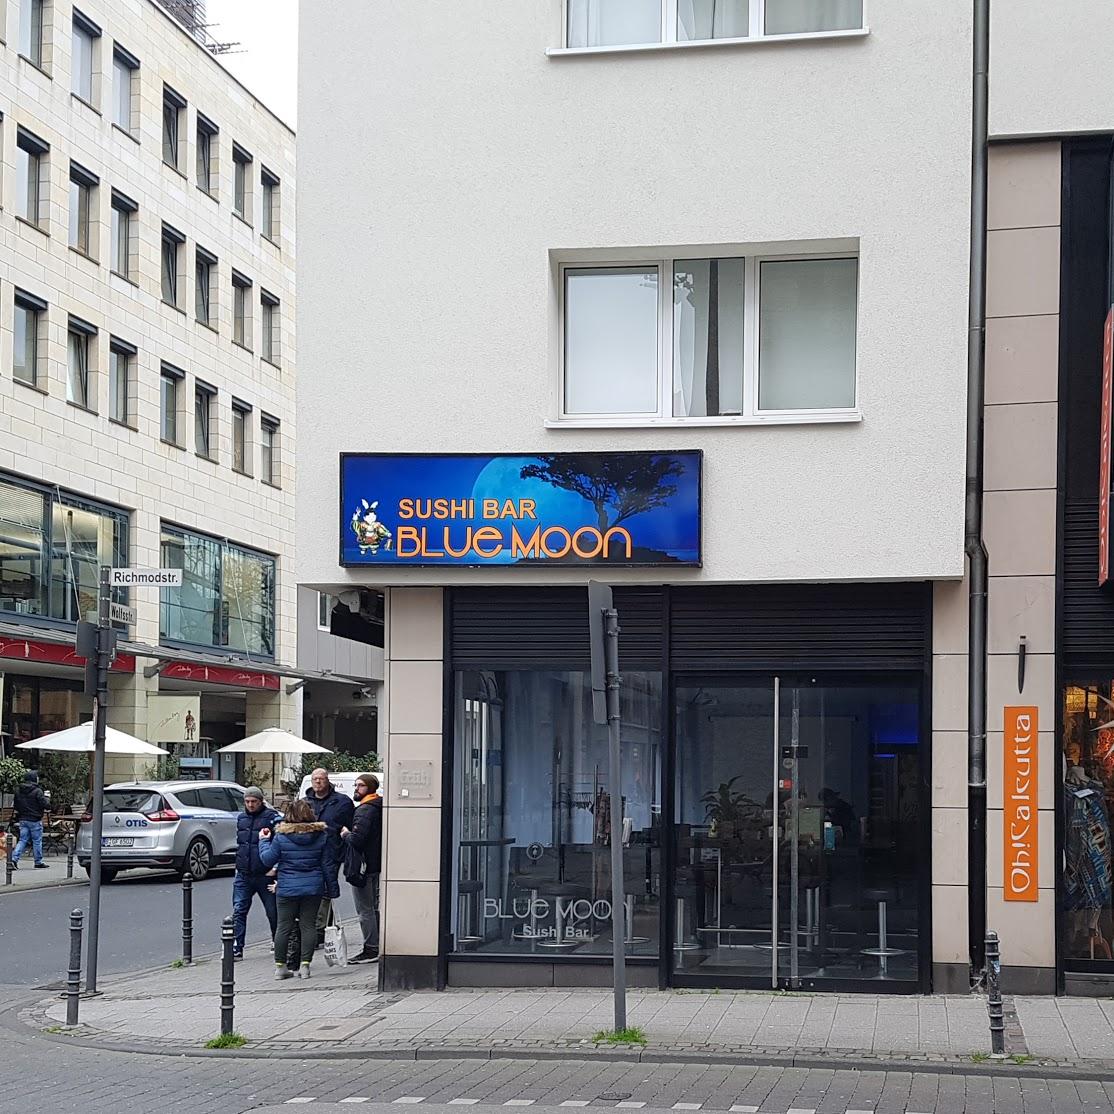 Restaurant "Blue Moon Sushi Bar" in Köln